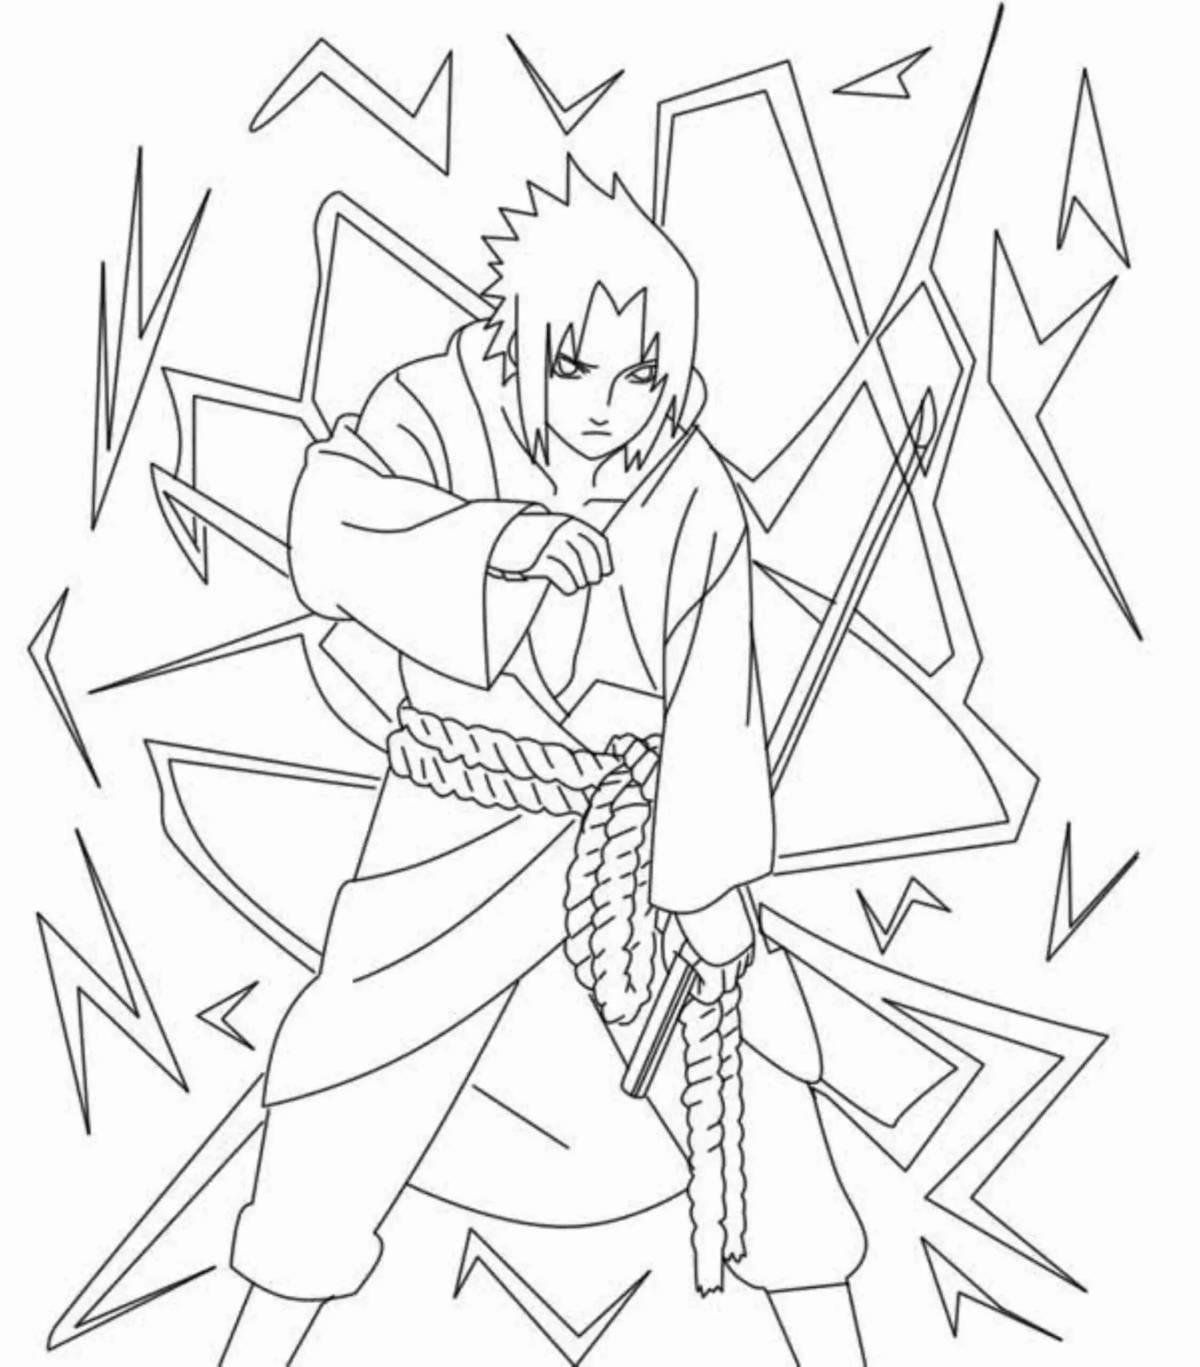 Colorfully detailed naruto and sasuke coloring page